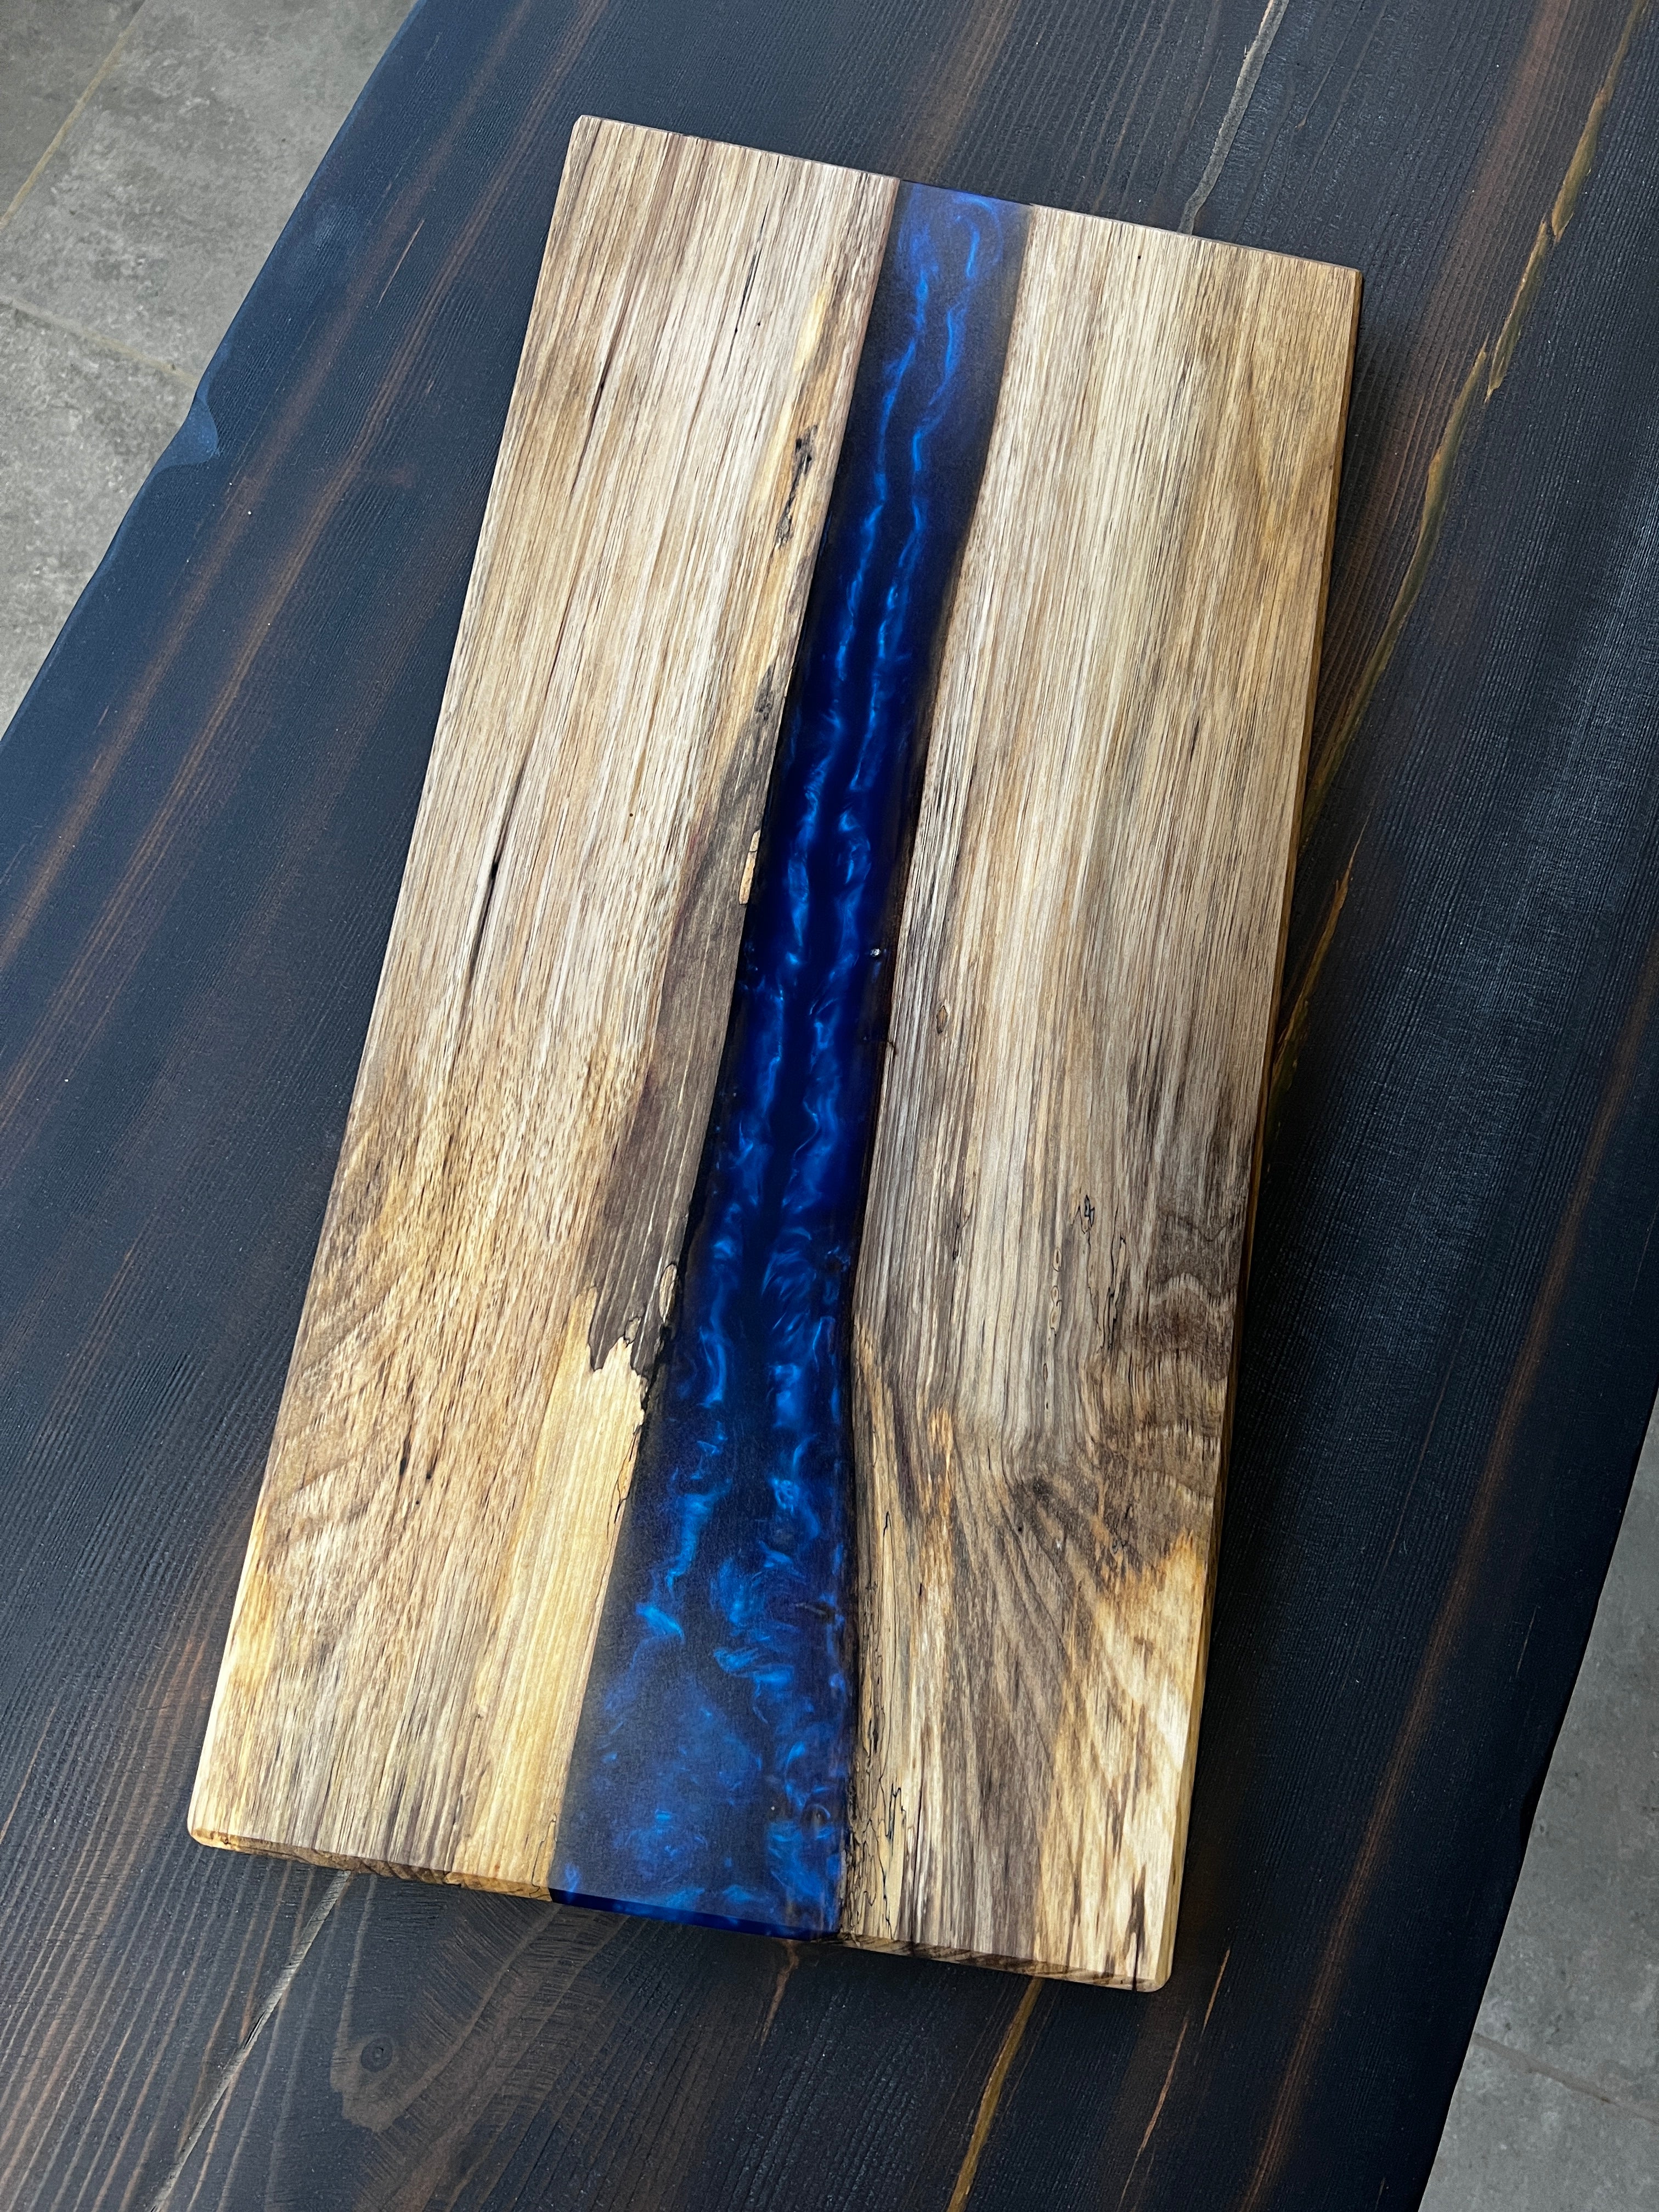 Silver Maple & Dragon Blue Resin Charcuterie Board